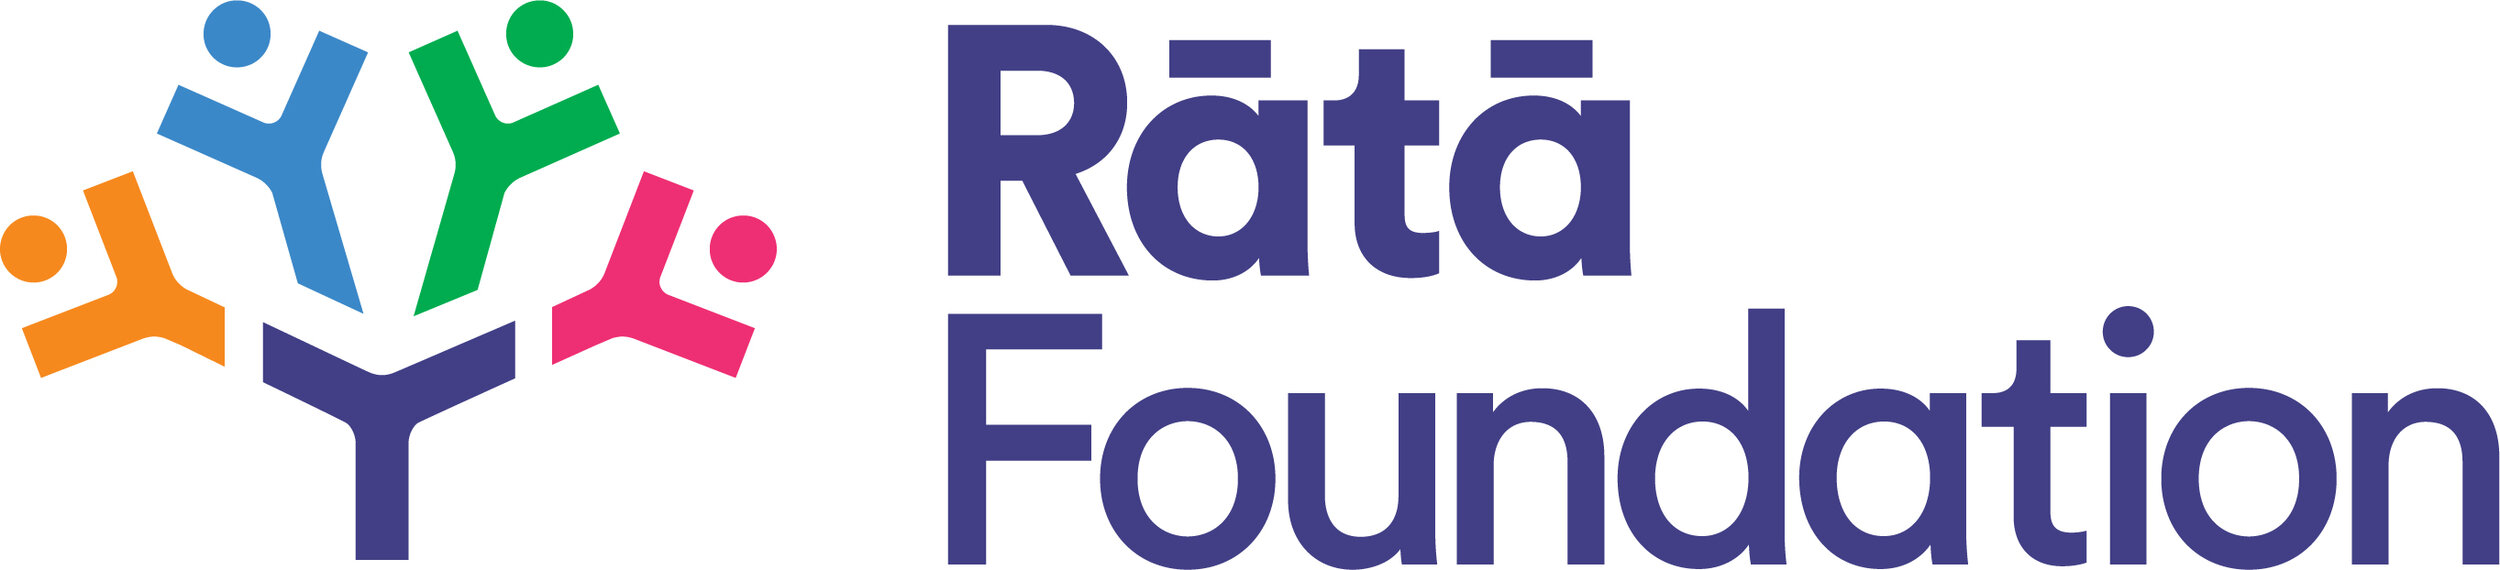 Rata Foundation Logo - High resolution.jpg